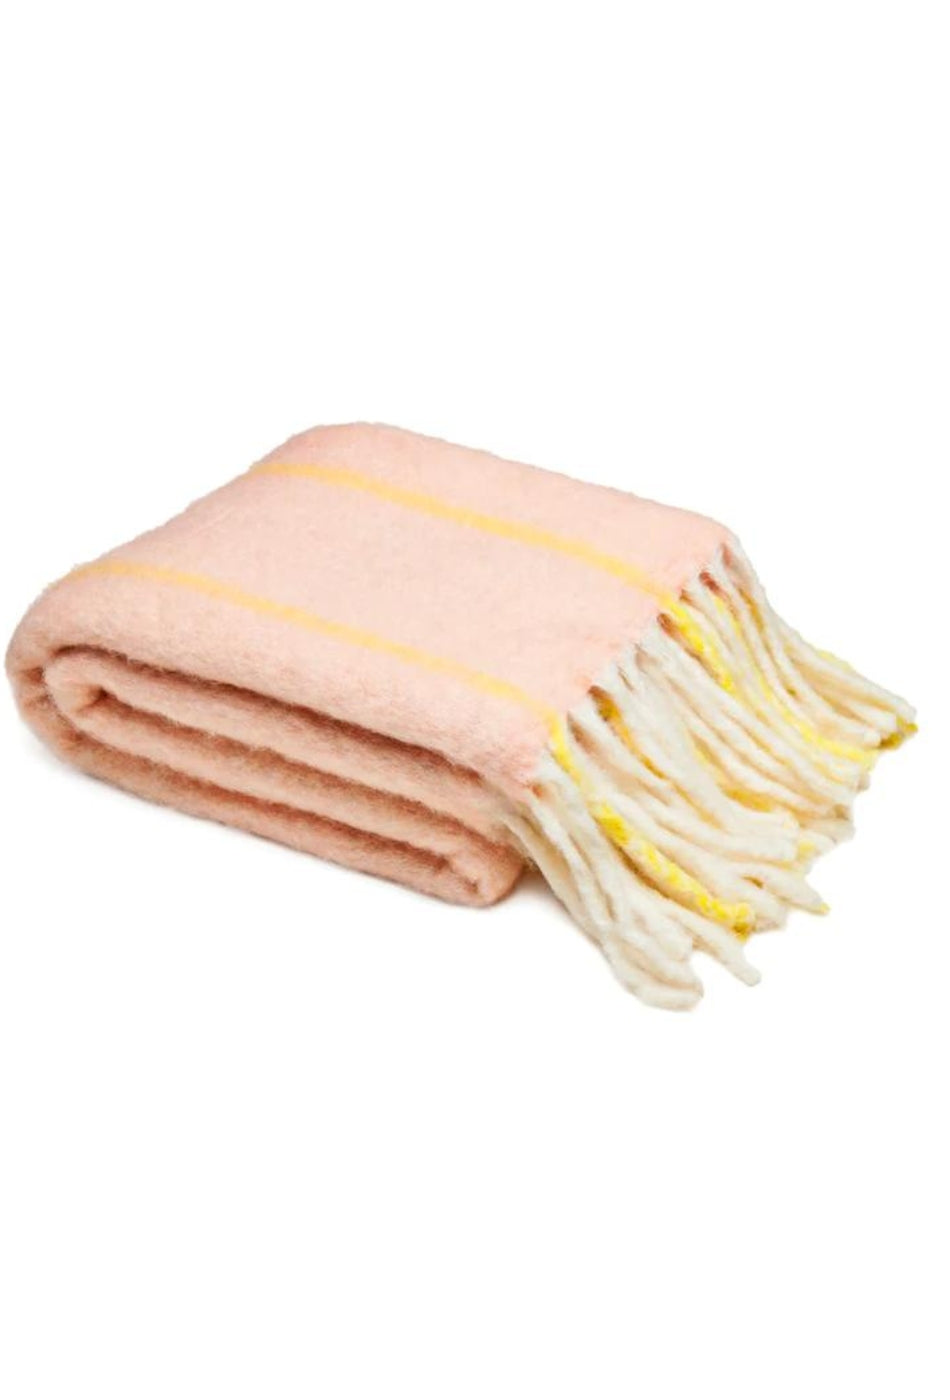 Bumble Blanket - Pink Lemonade-Rachel Castle-P&K The General Store